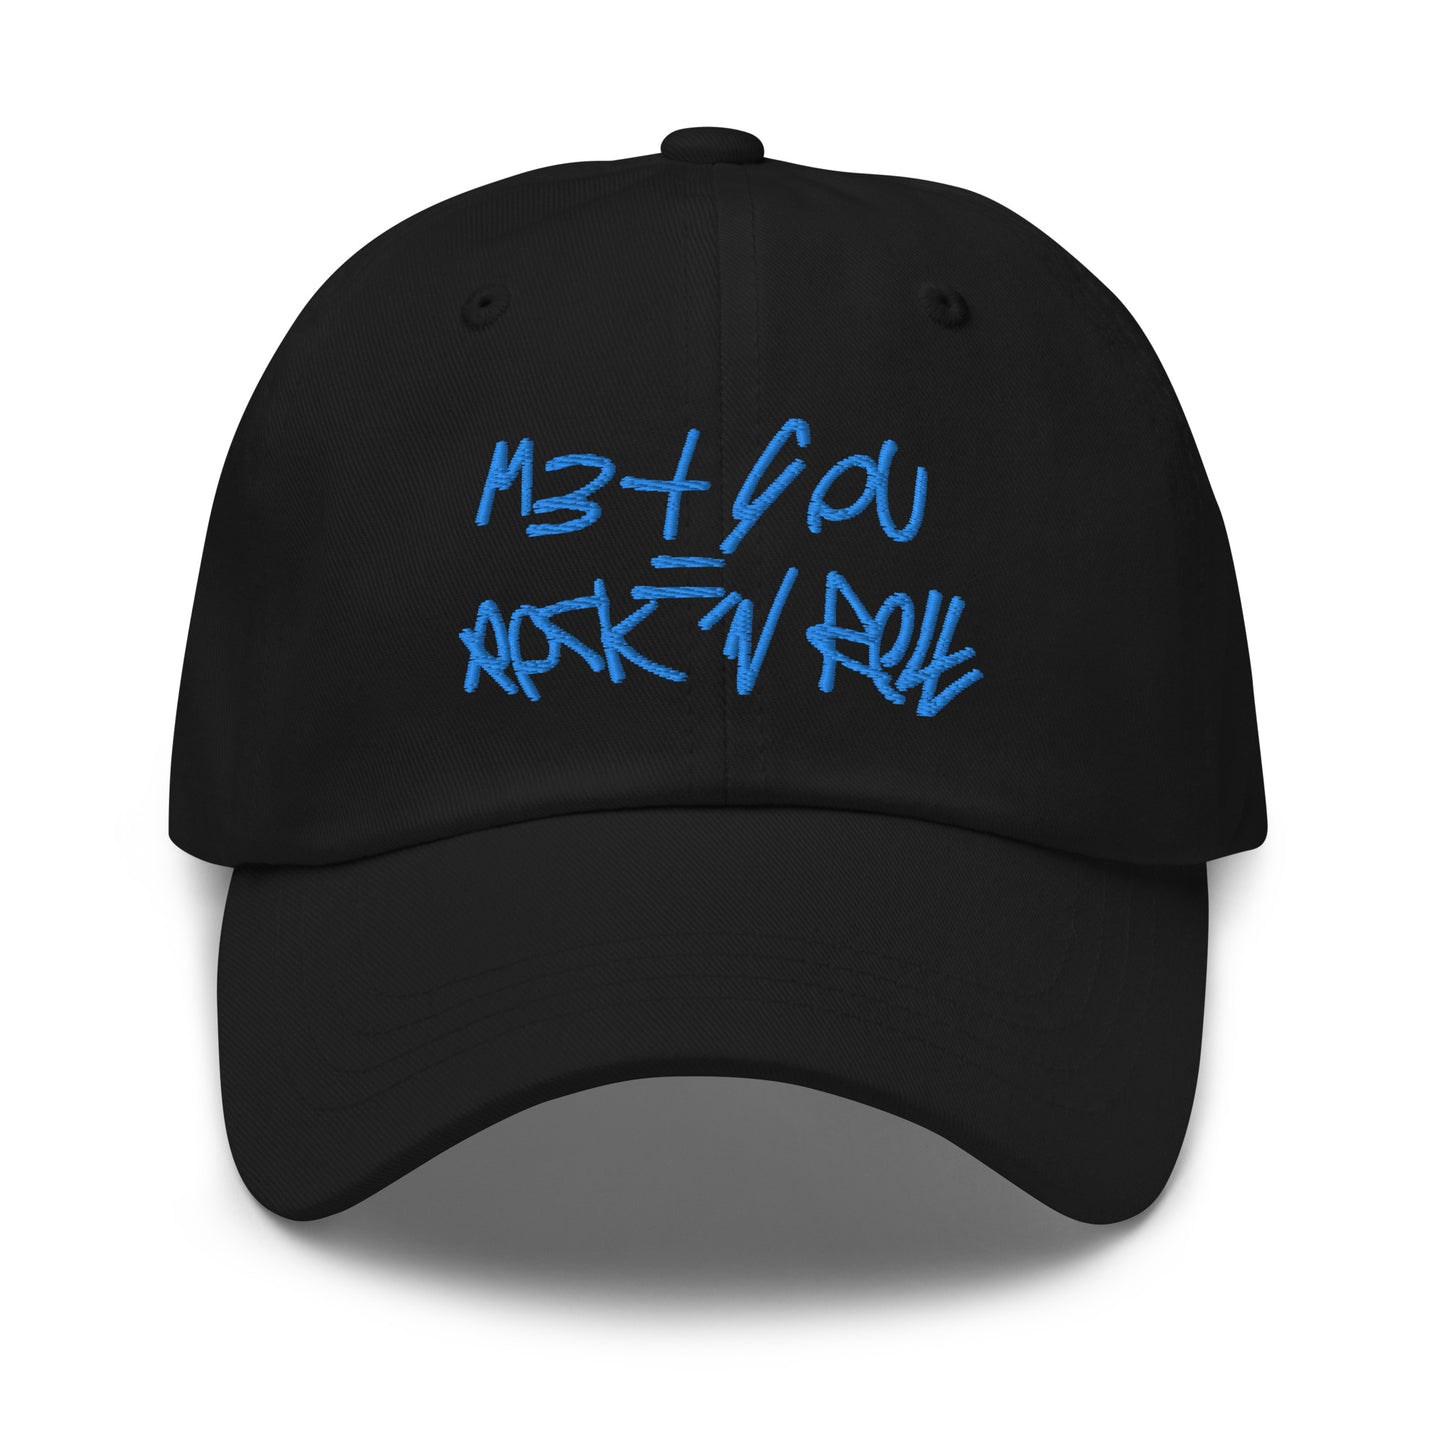 "Me+You=Rock'nRoll" Hat